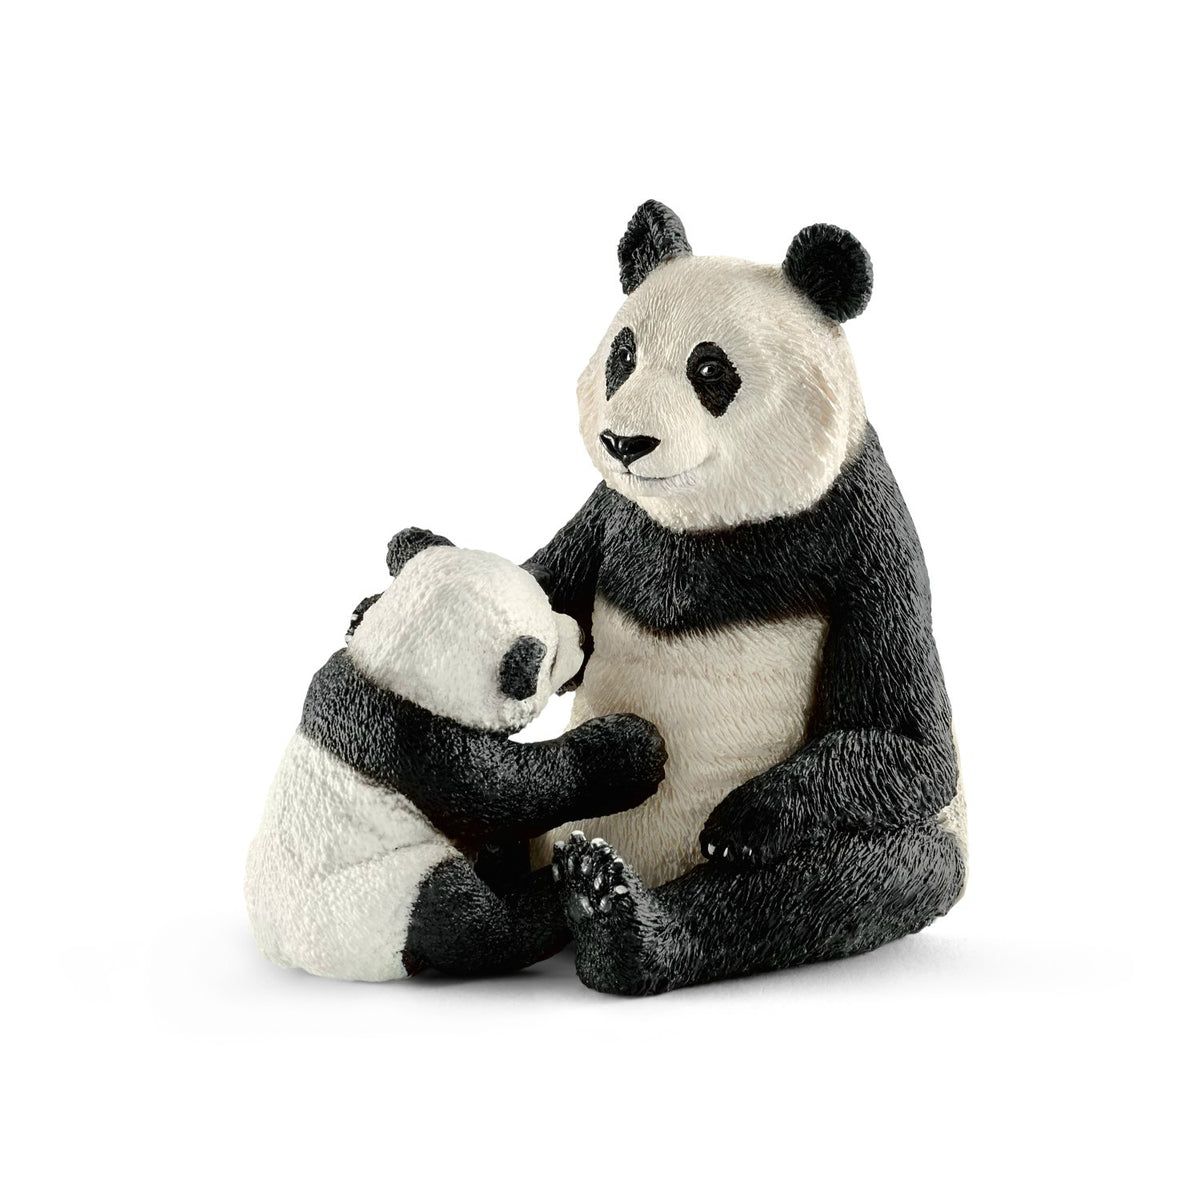 Schleich 14773 Figurine Female Giant Panda Toy